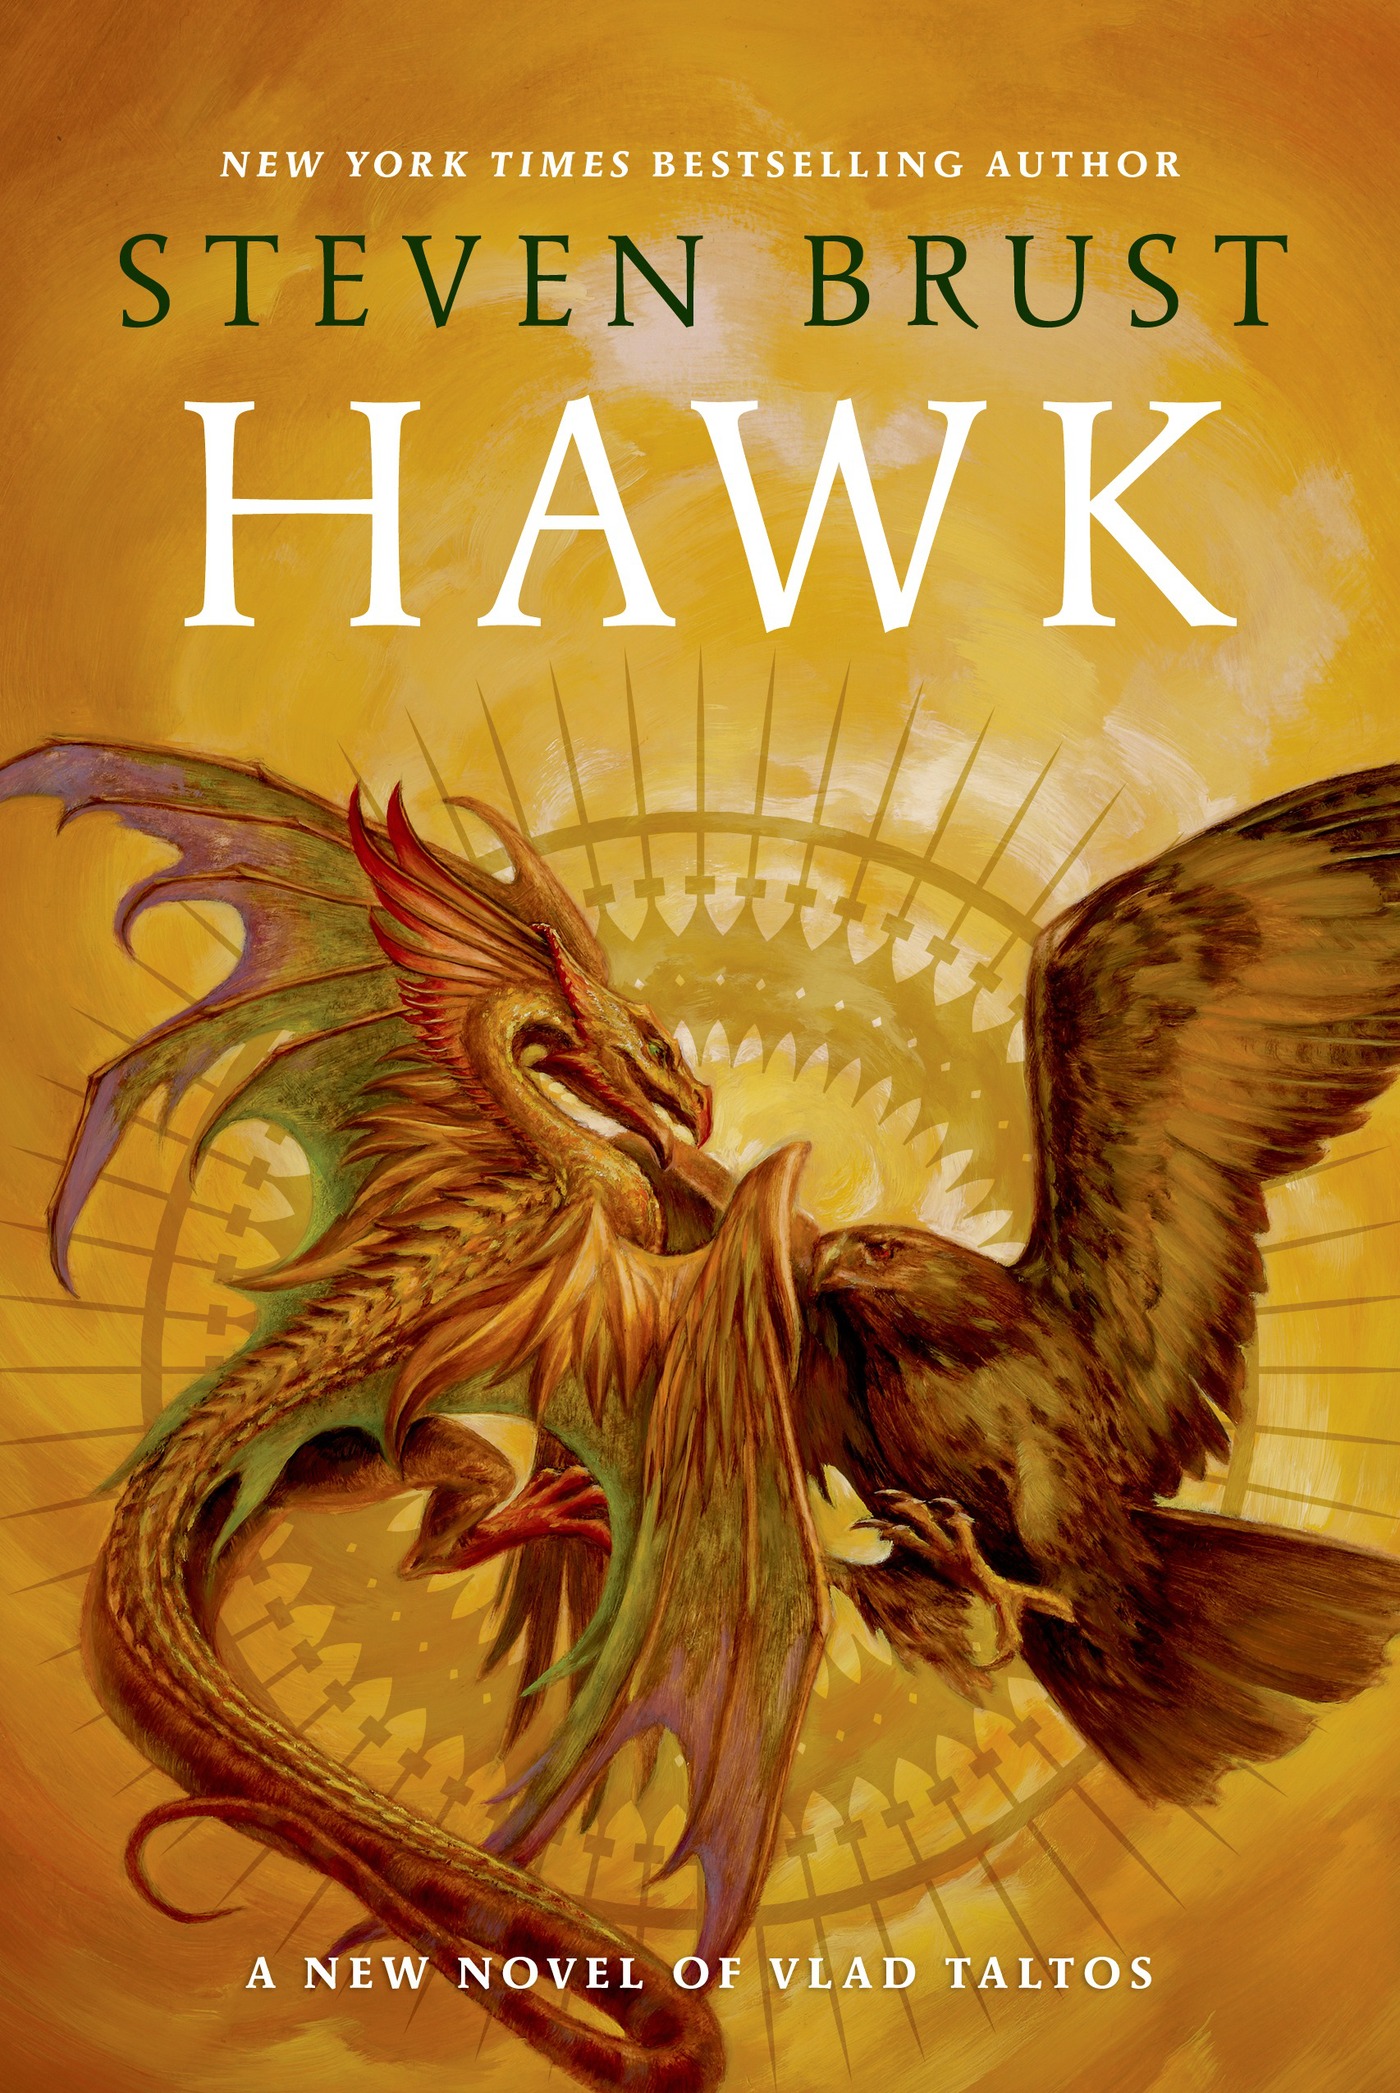 Hawk : A New Novel Vlad Taltos by Steven Brust